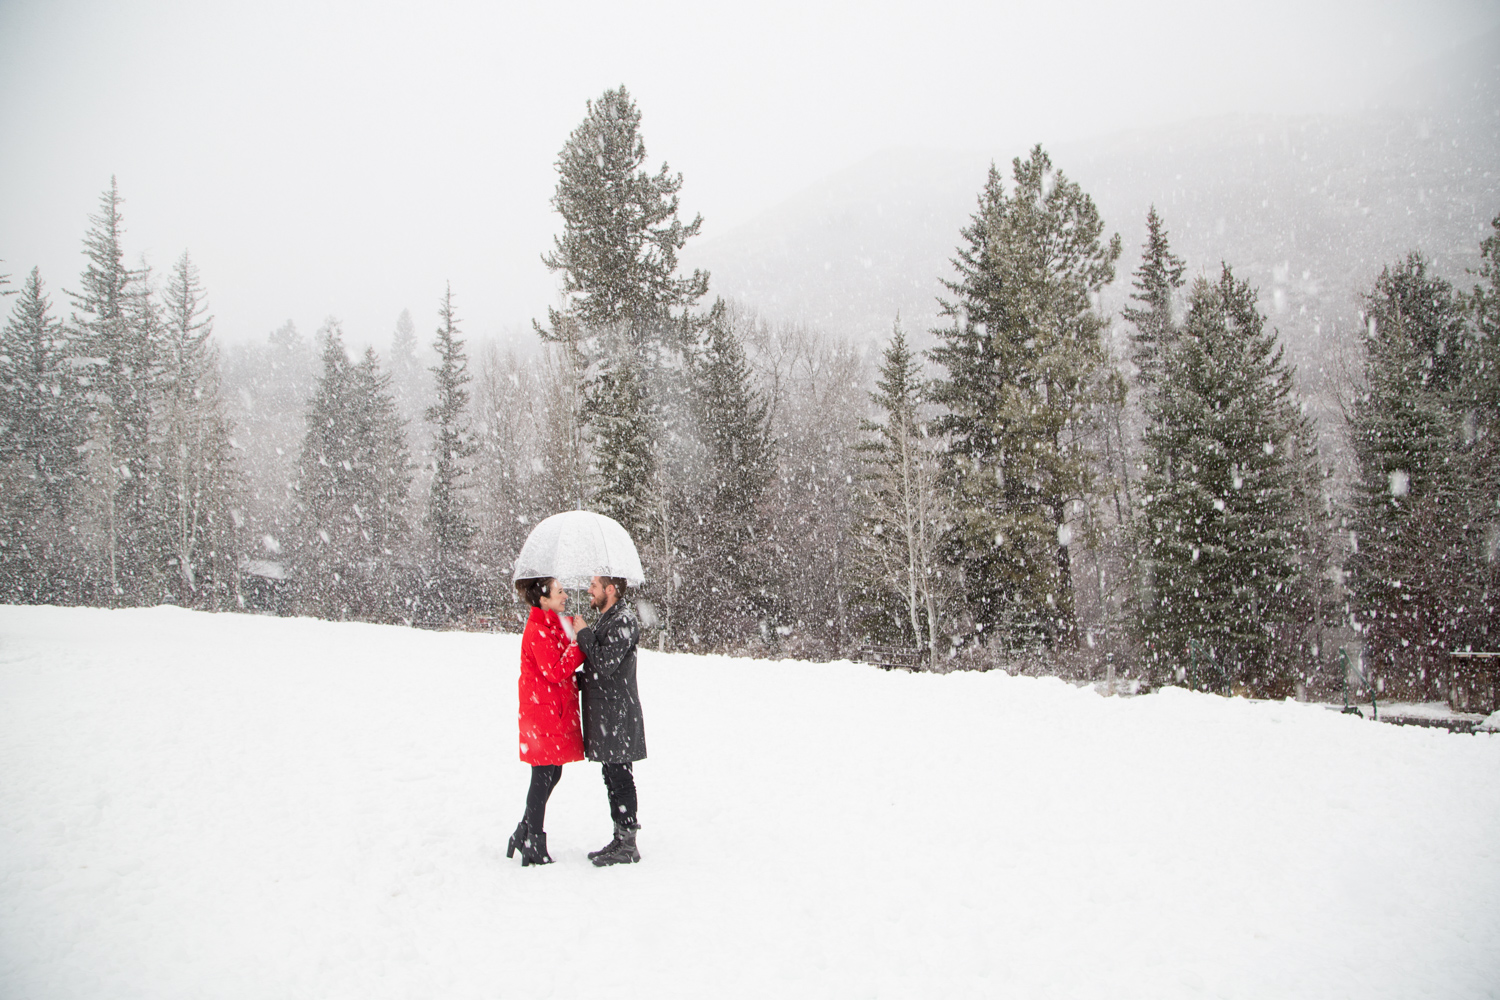 Snow Day at Sundance Ski Resort